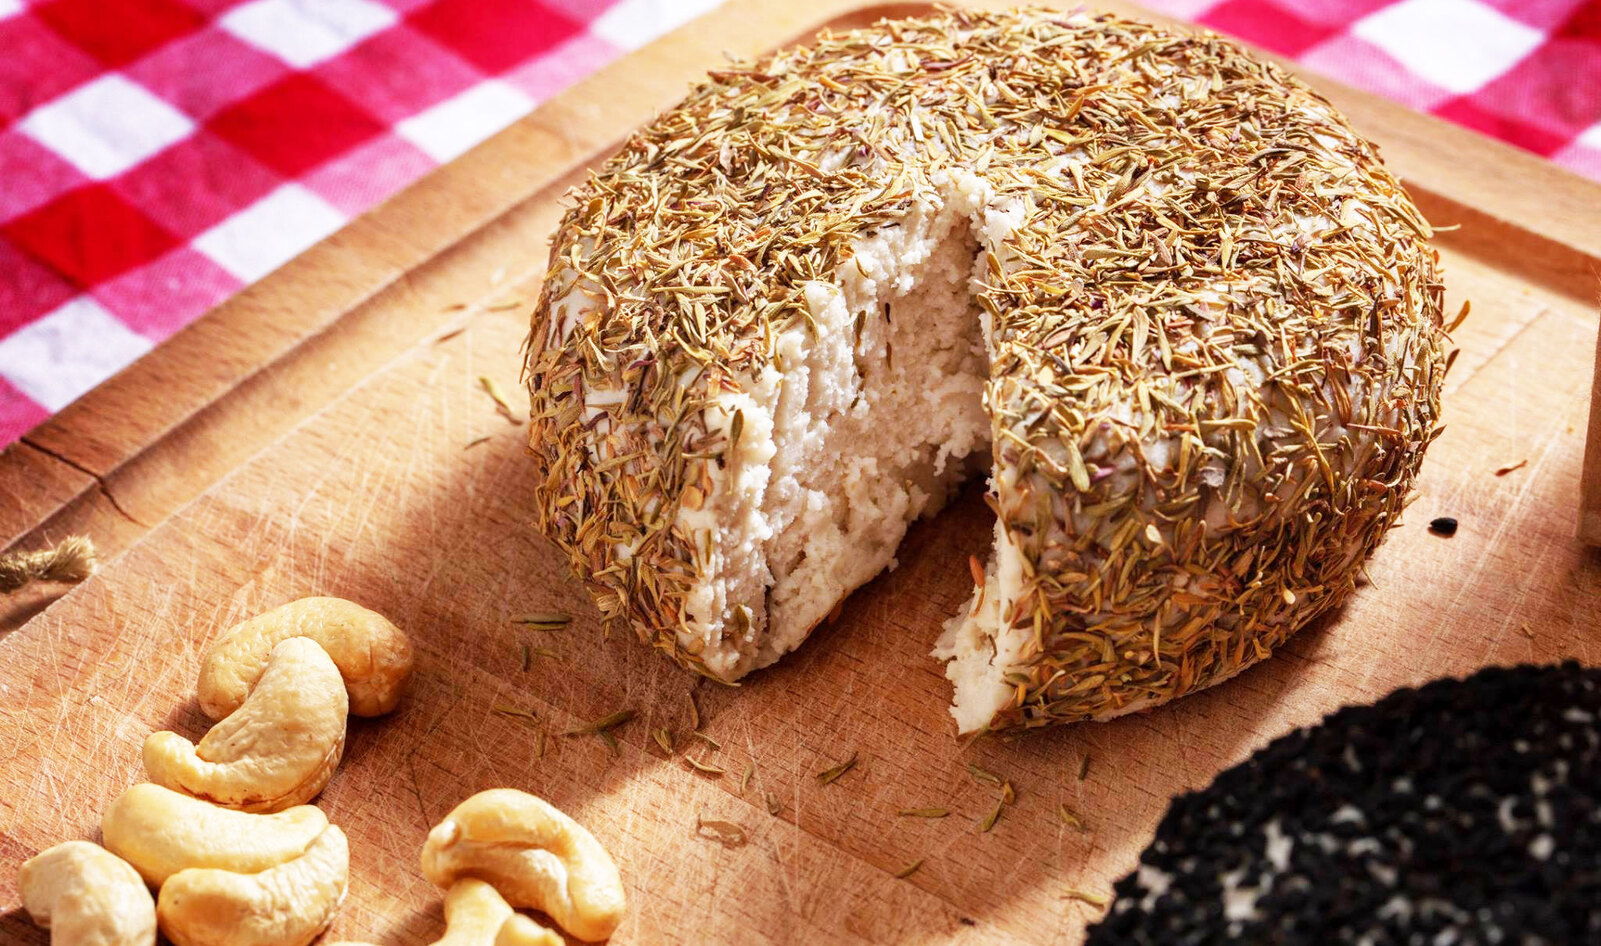 Danish Startup Develops DIY Vegan Cheese to Slash Food Waste